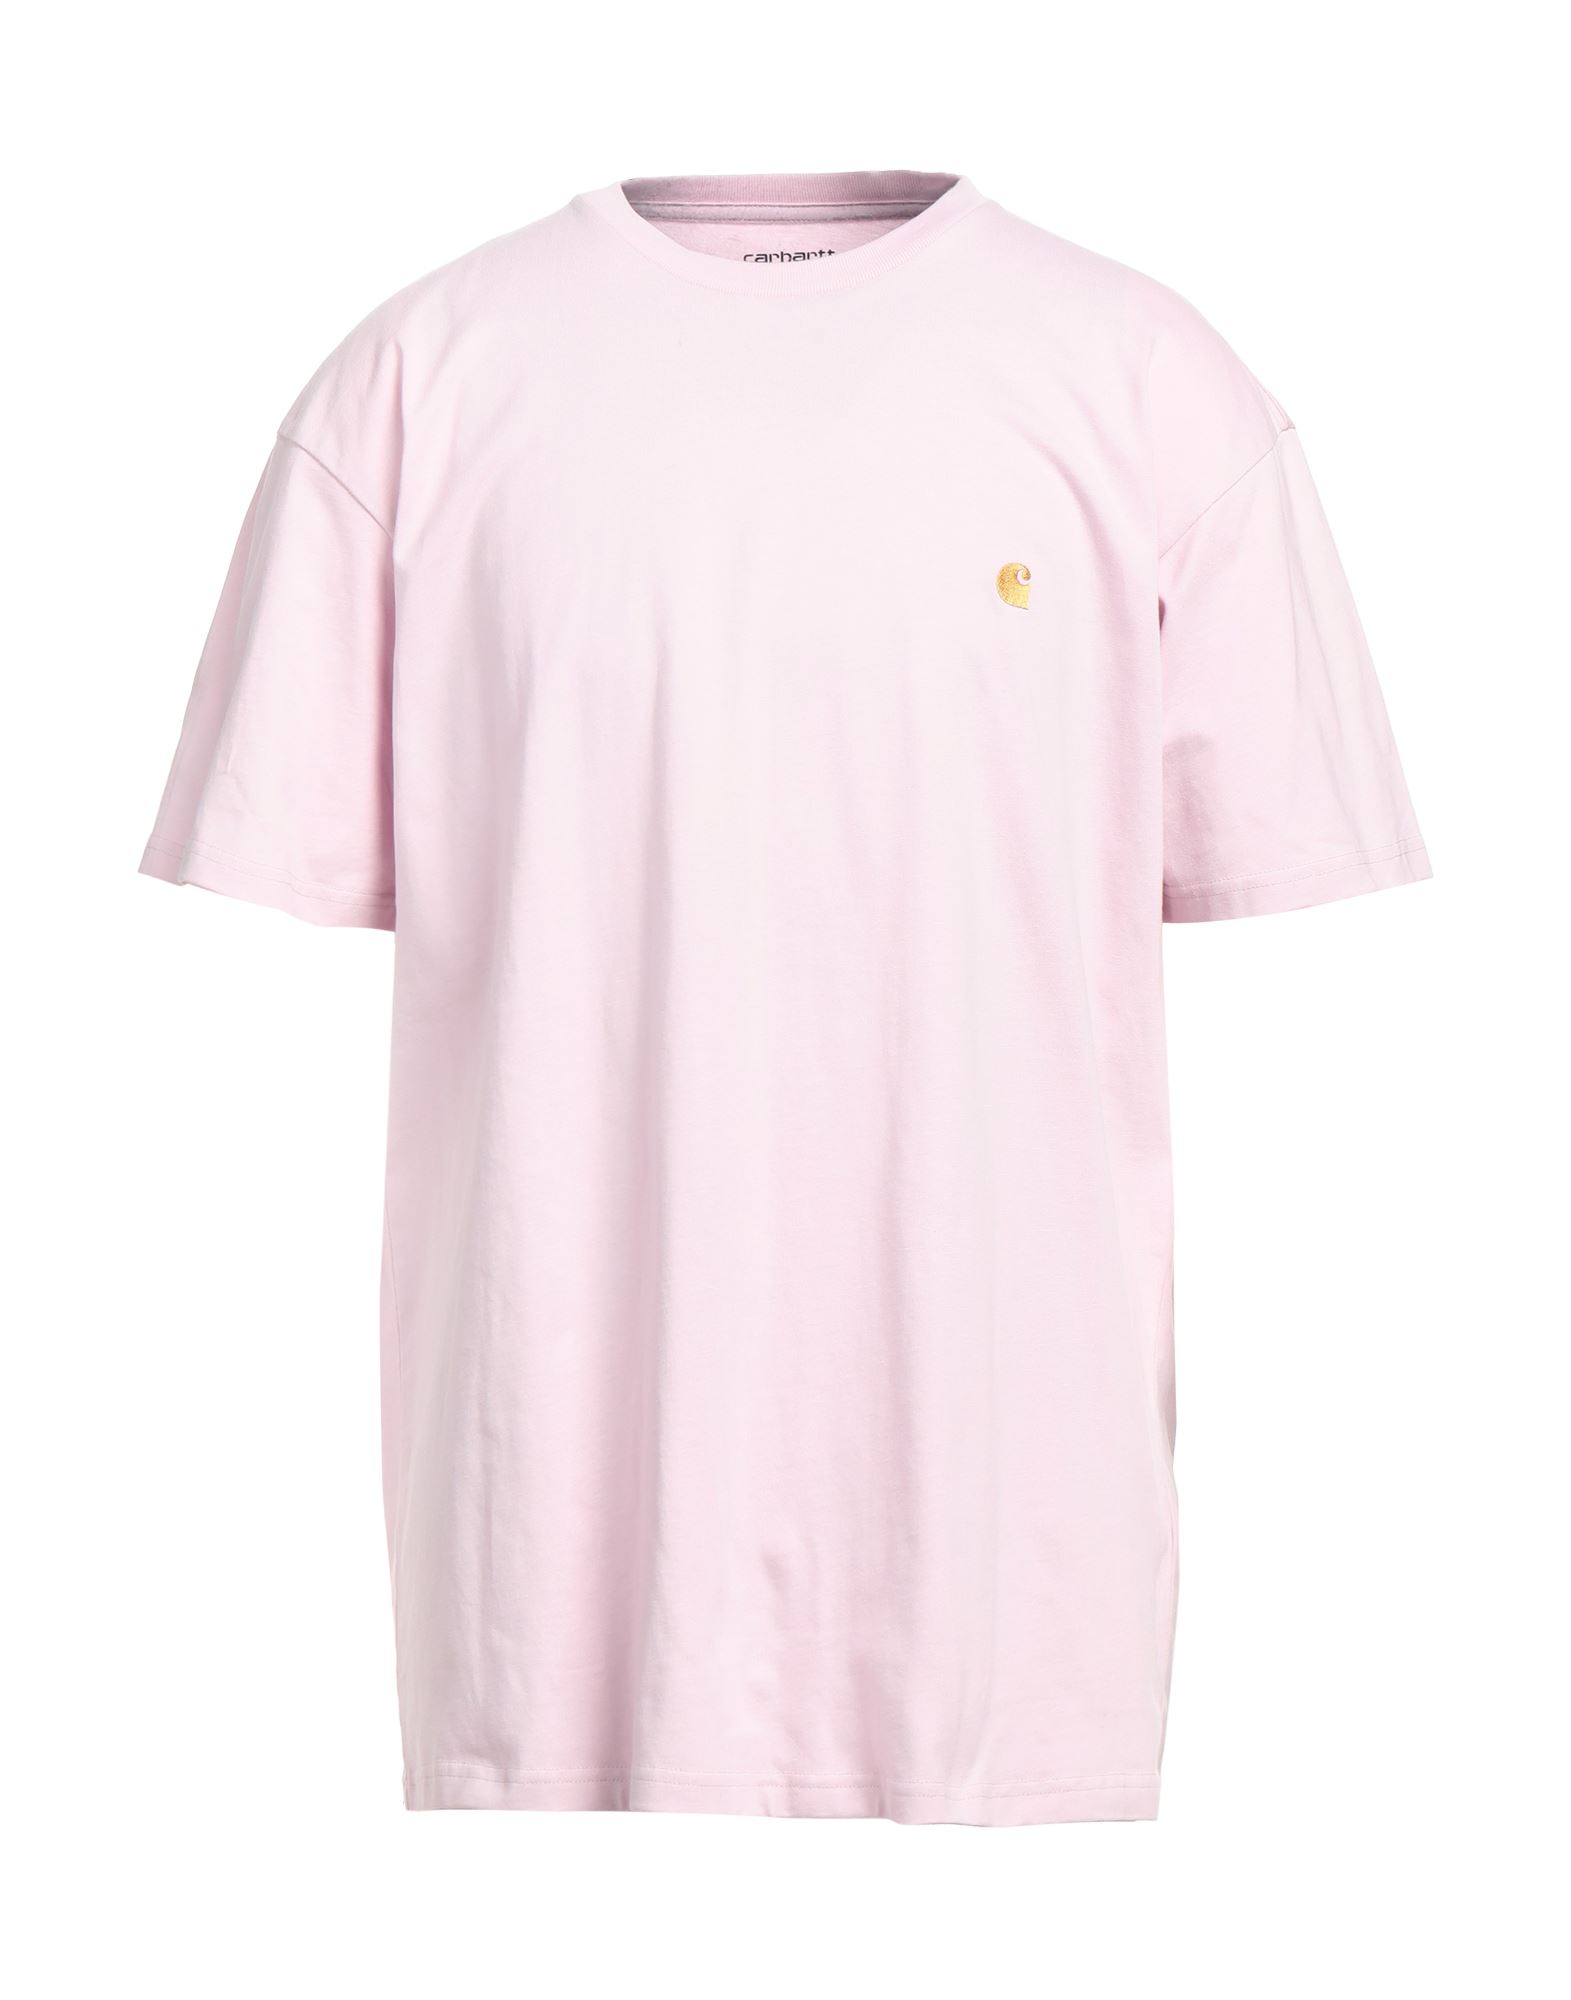 Carhartt T-shirts In Light Pink